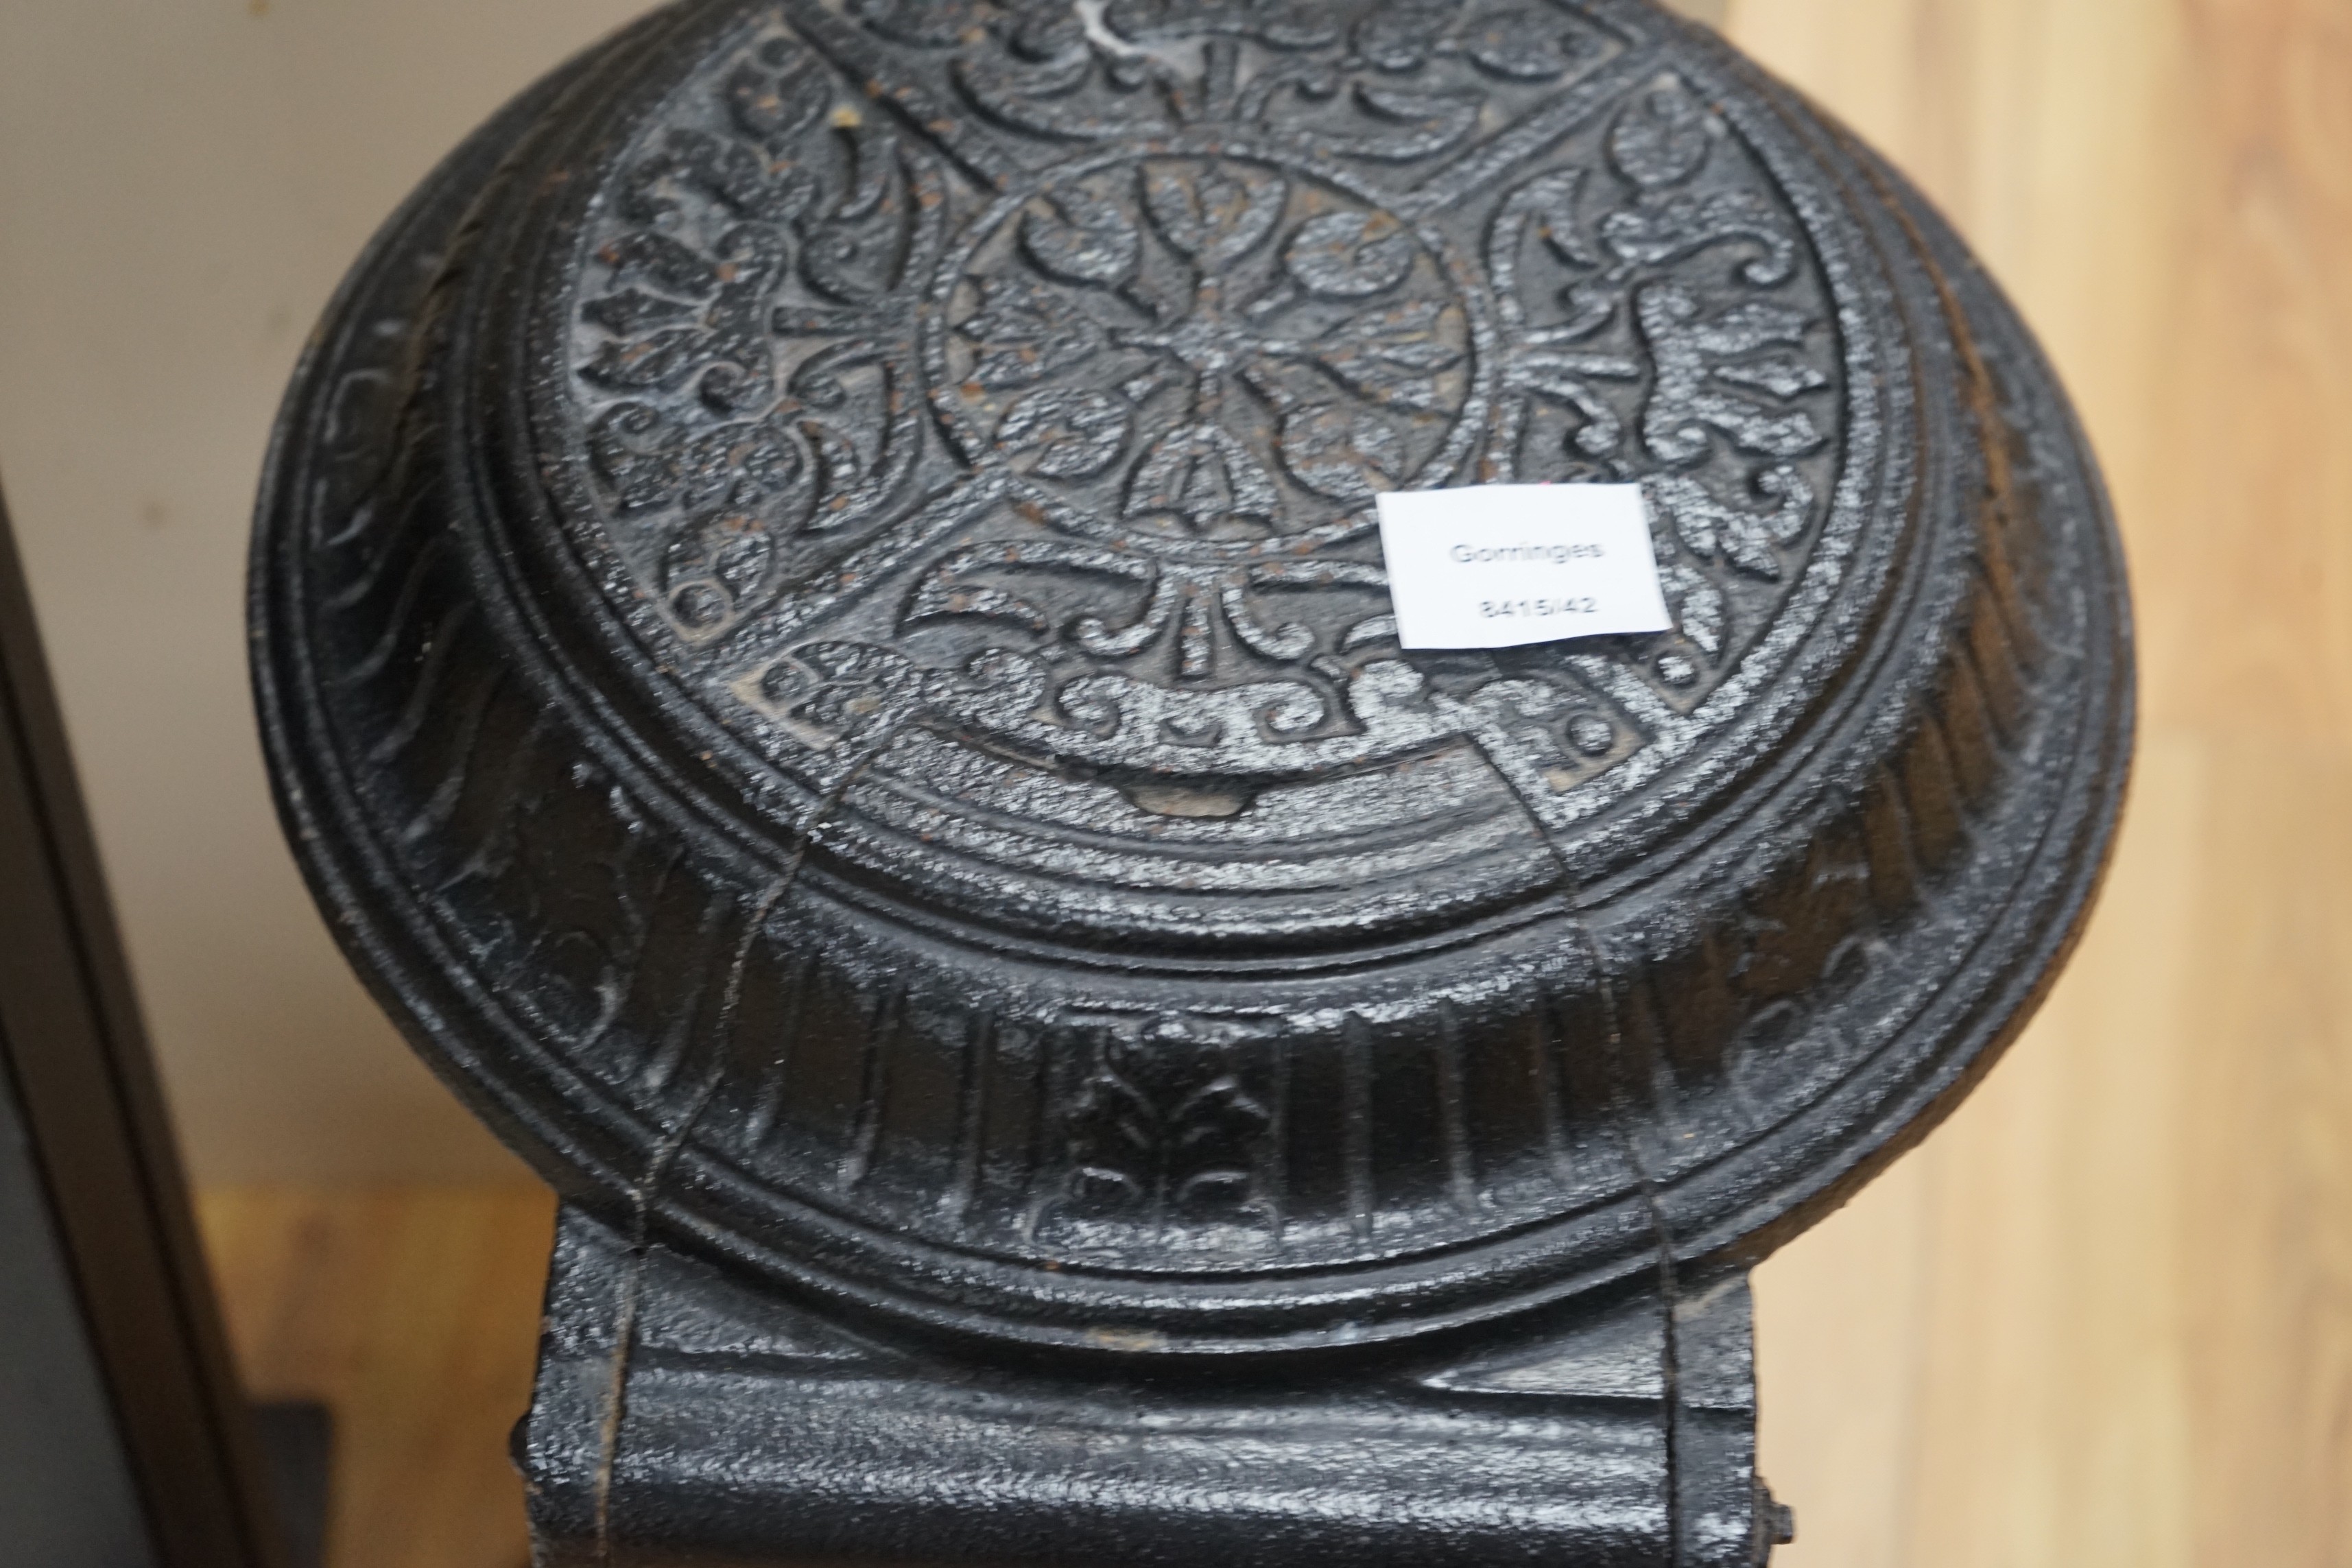 A cast iron stove - 'The Slogan Stove’, 58cm